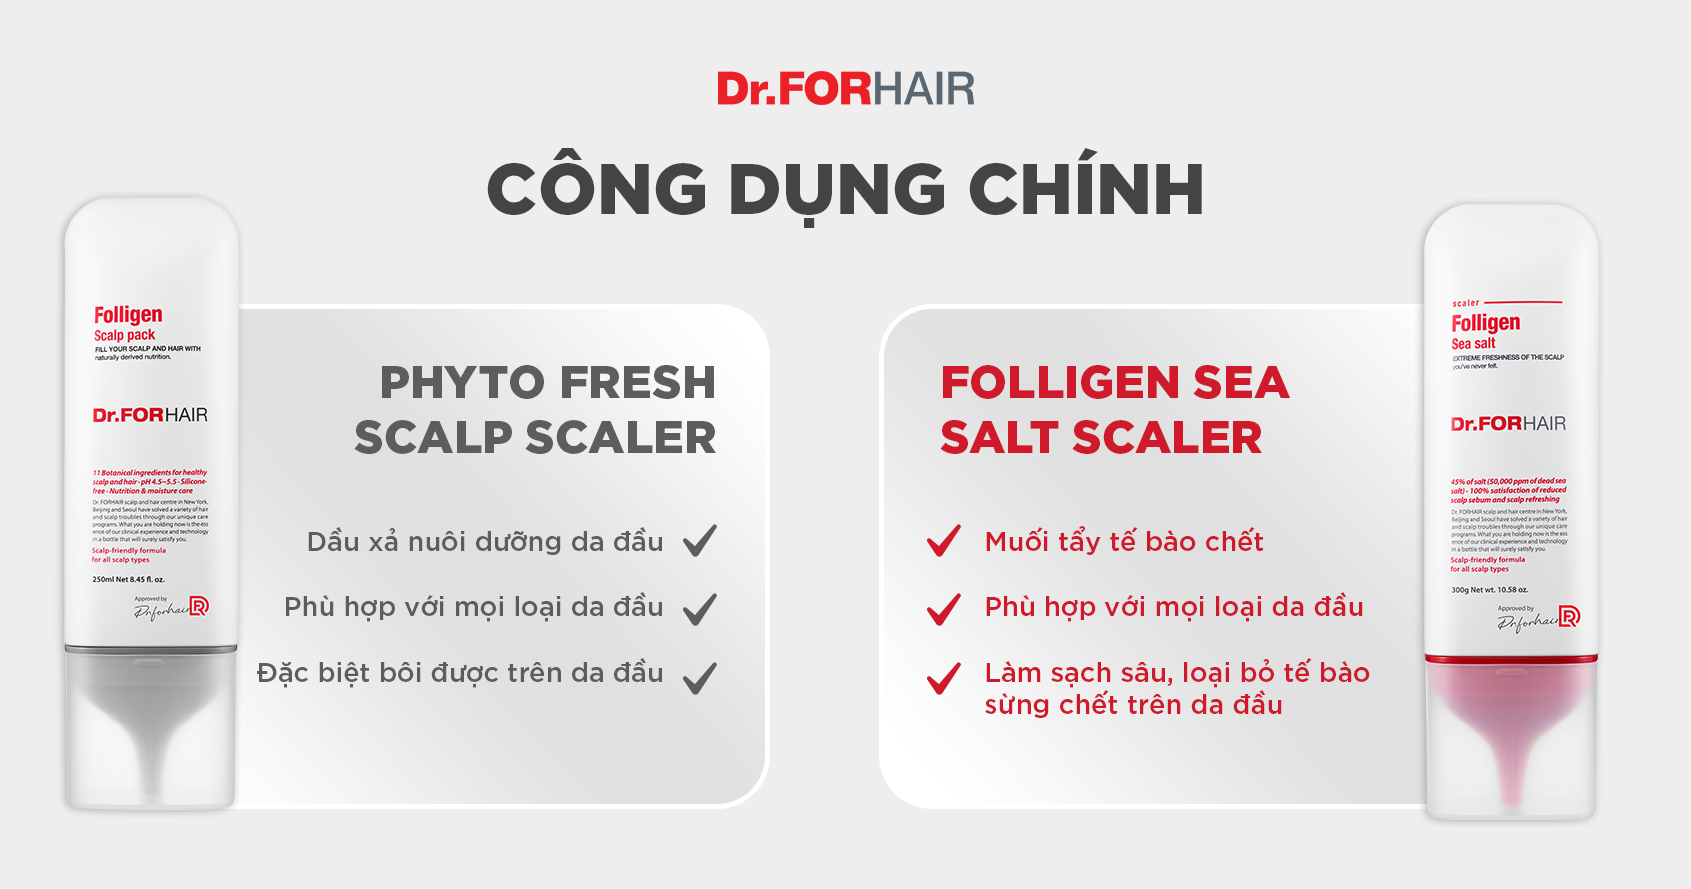 Công dụng chính của Folligen Scalp Pack và Folligen Sea Salt Scaler của Dr.FORHAIR